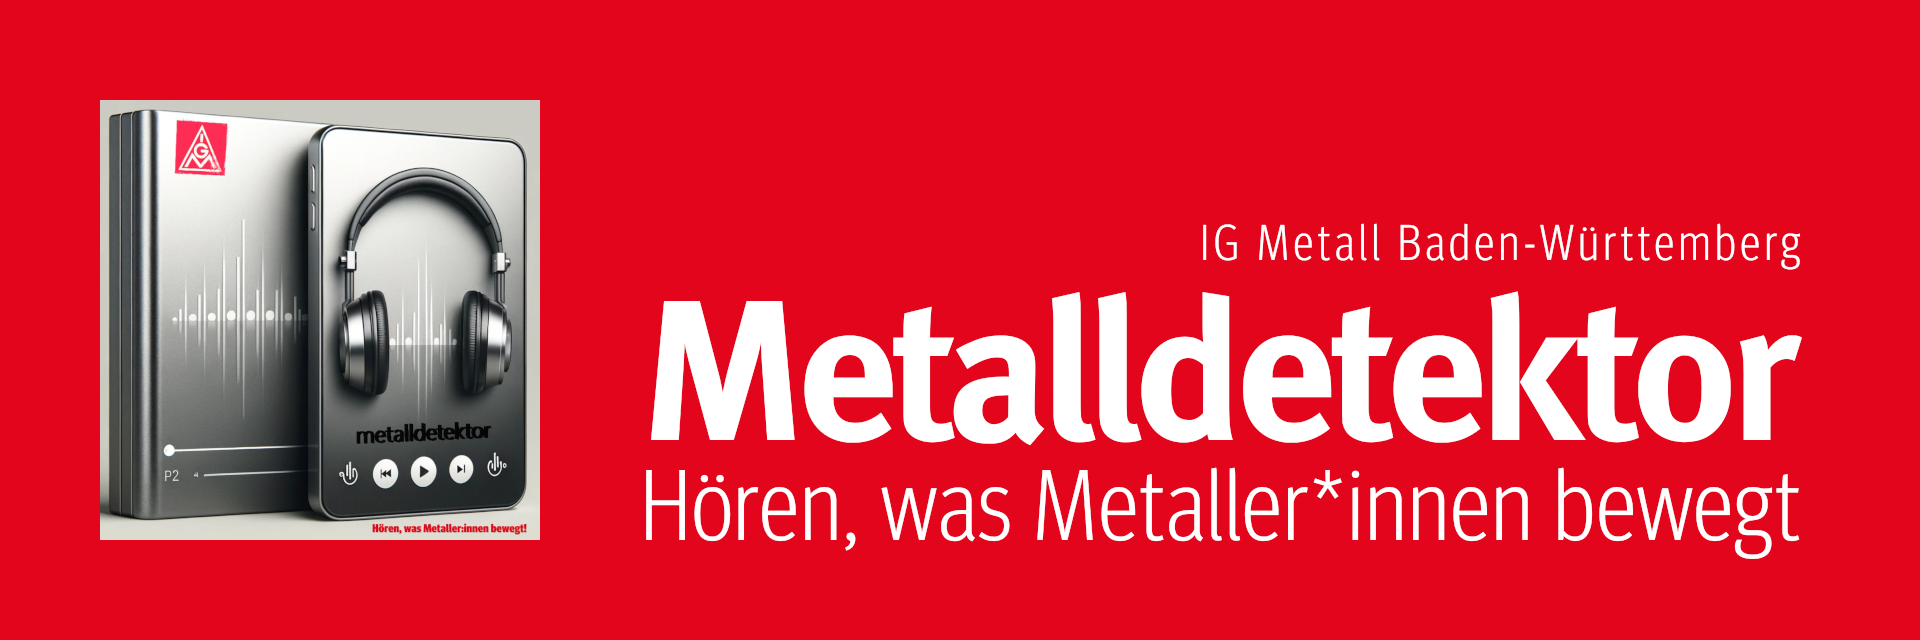 Metalldetektor - Hören, was Metaller*innen bewegt